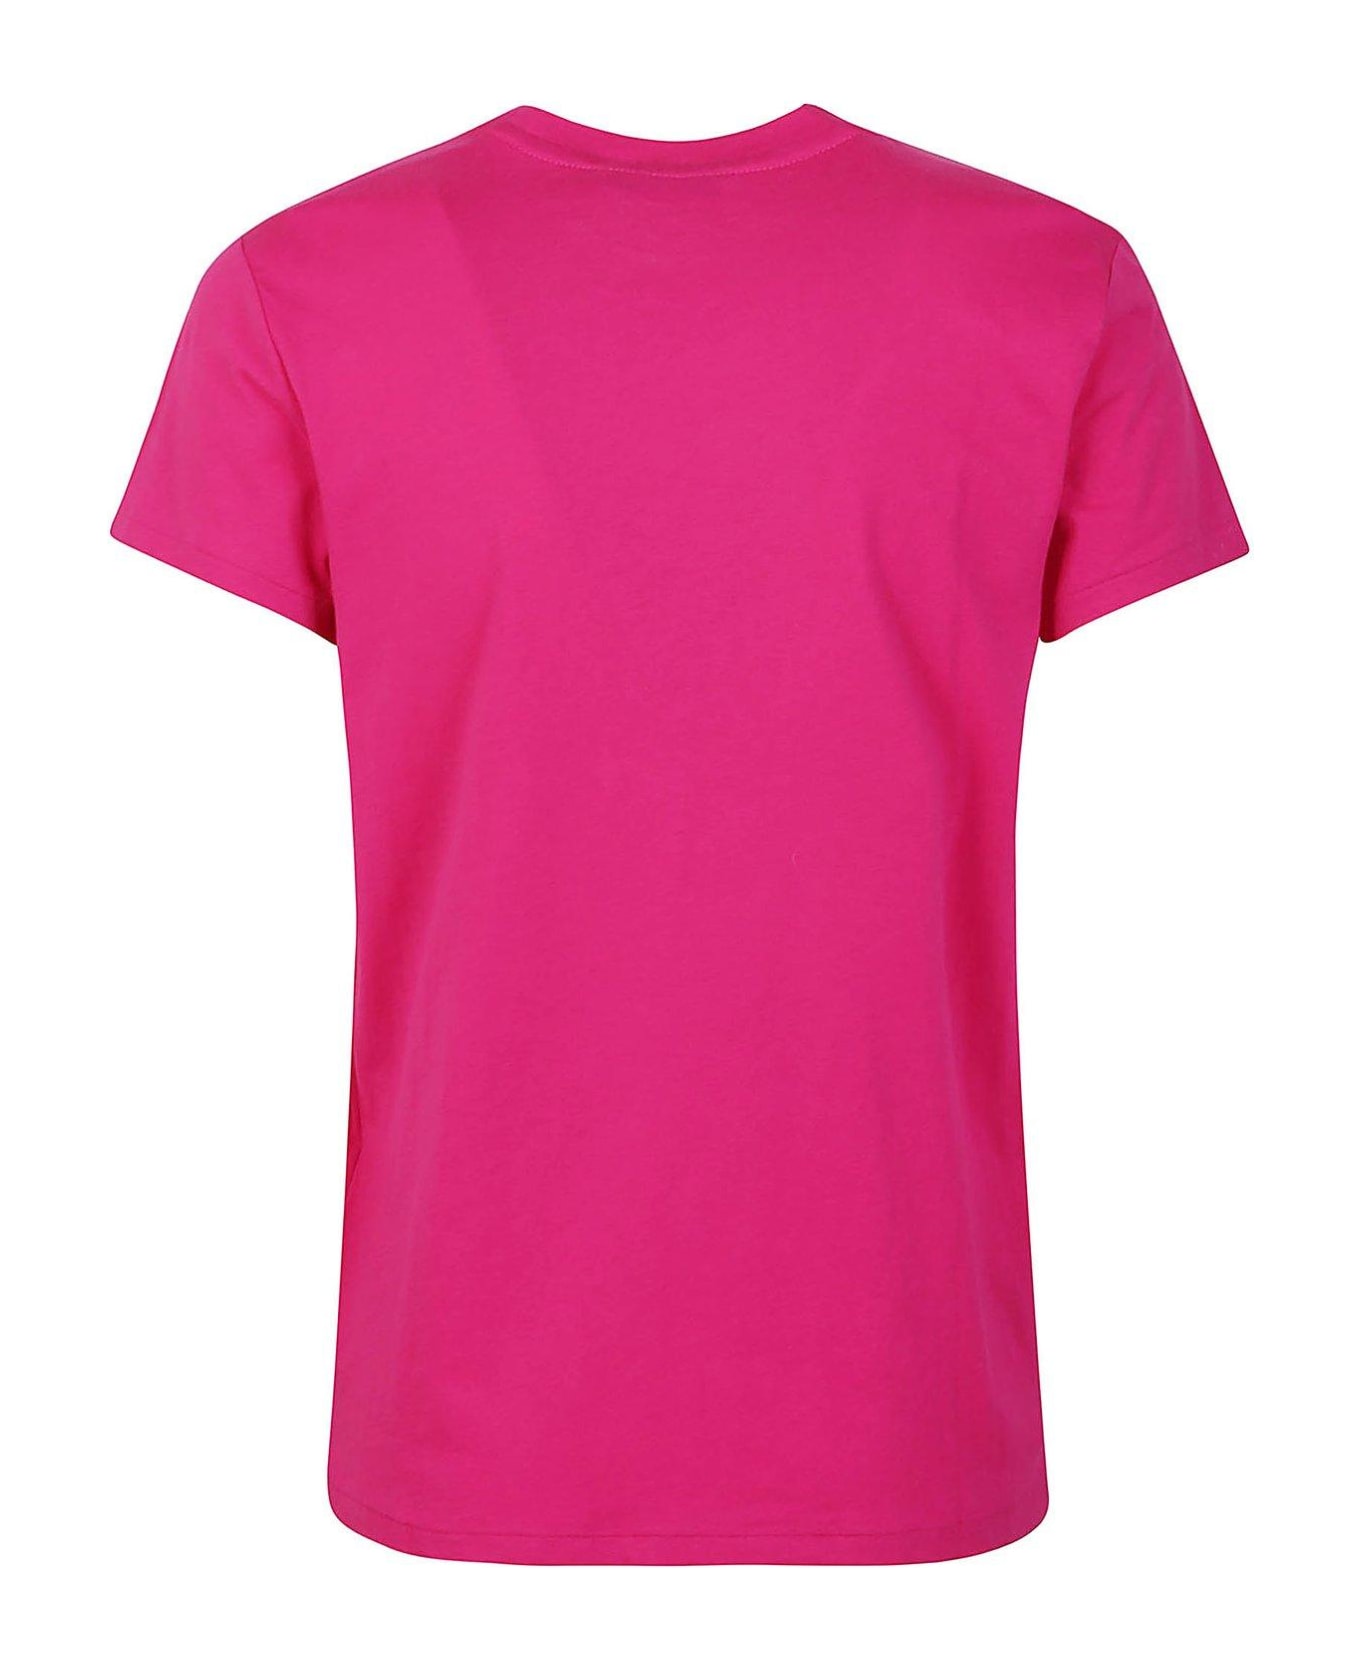 Ralph Lauren Pony Embroidered Crewneck T-shirt - Pink Sky Tシャツ